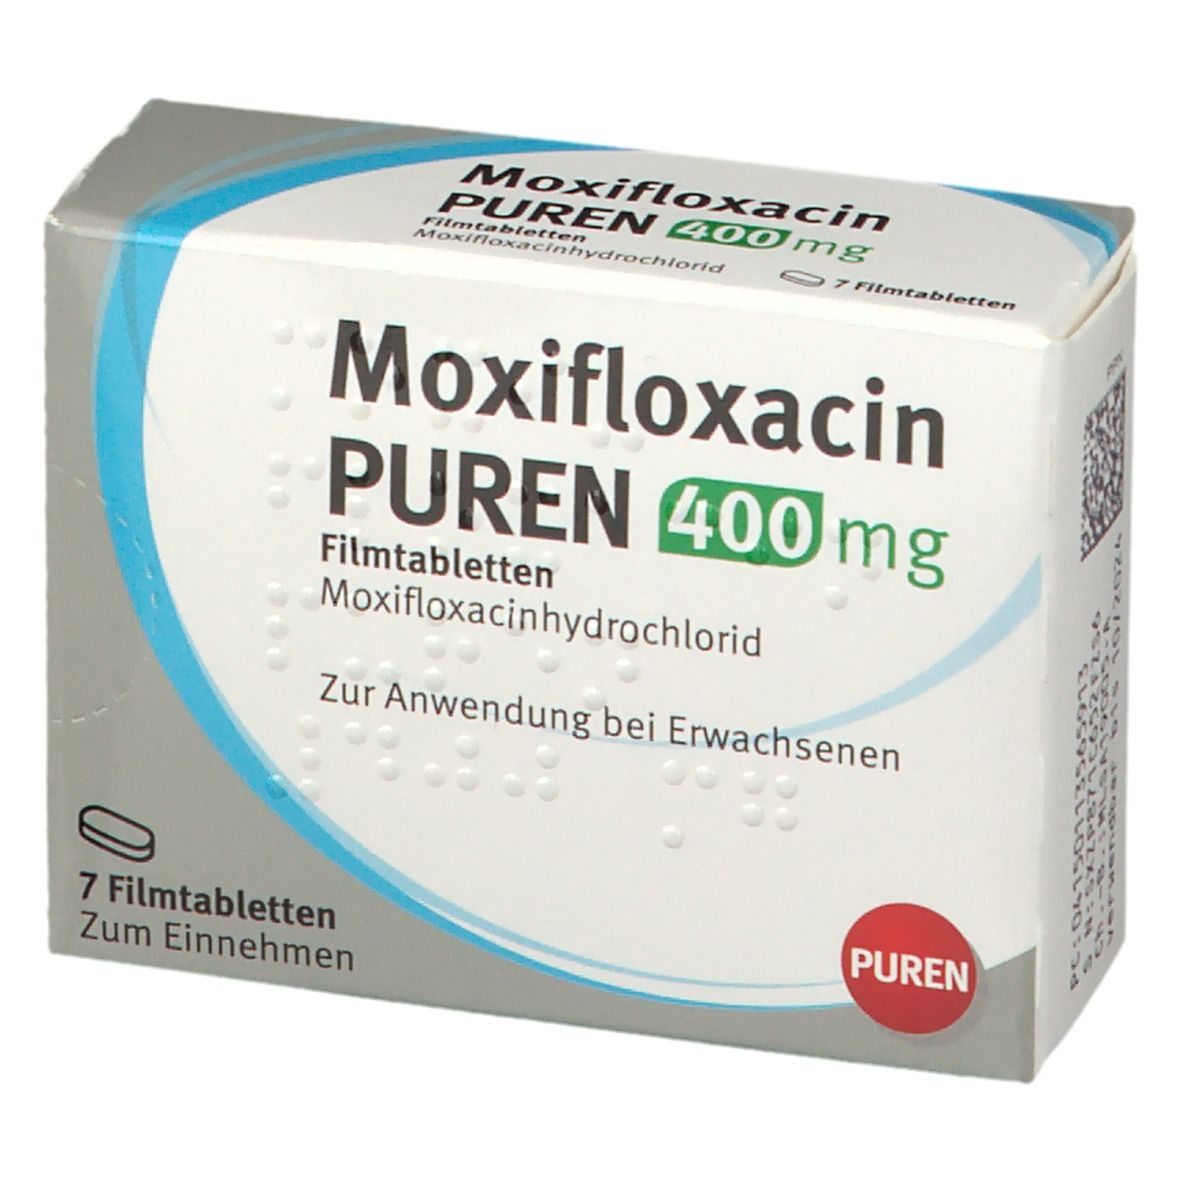 Moxifloxacin PUREN 400 mg